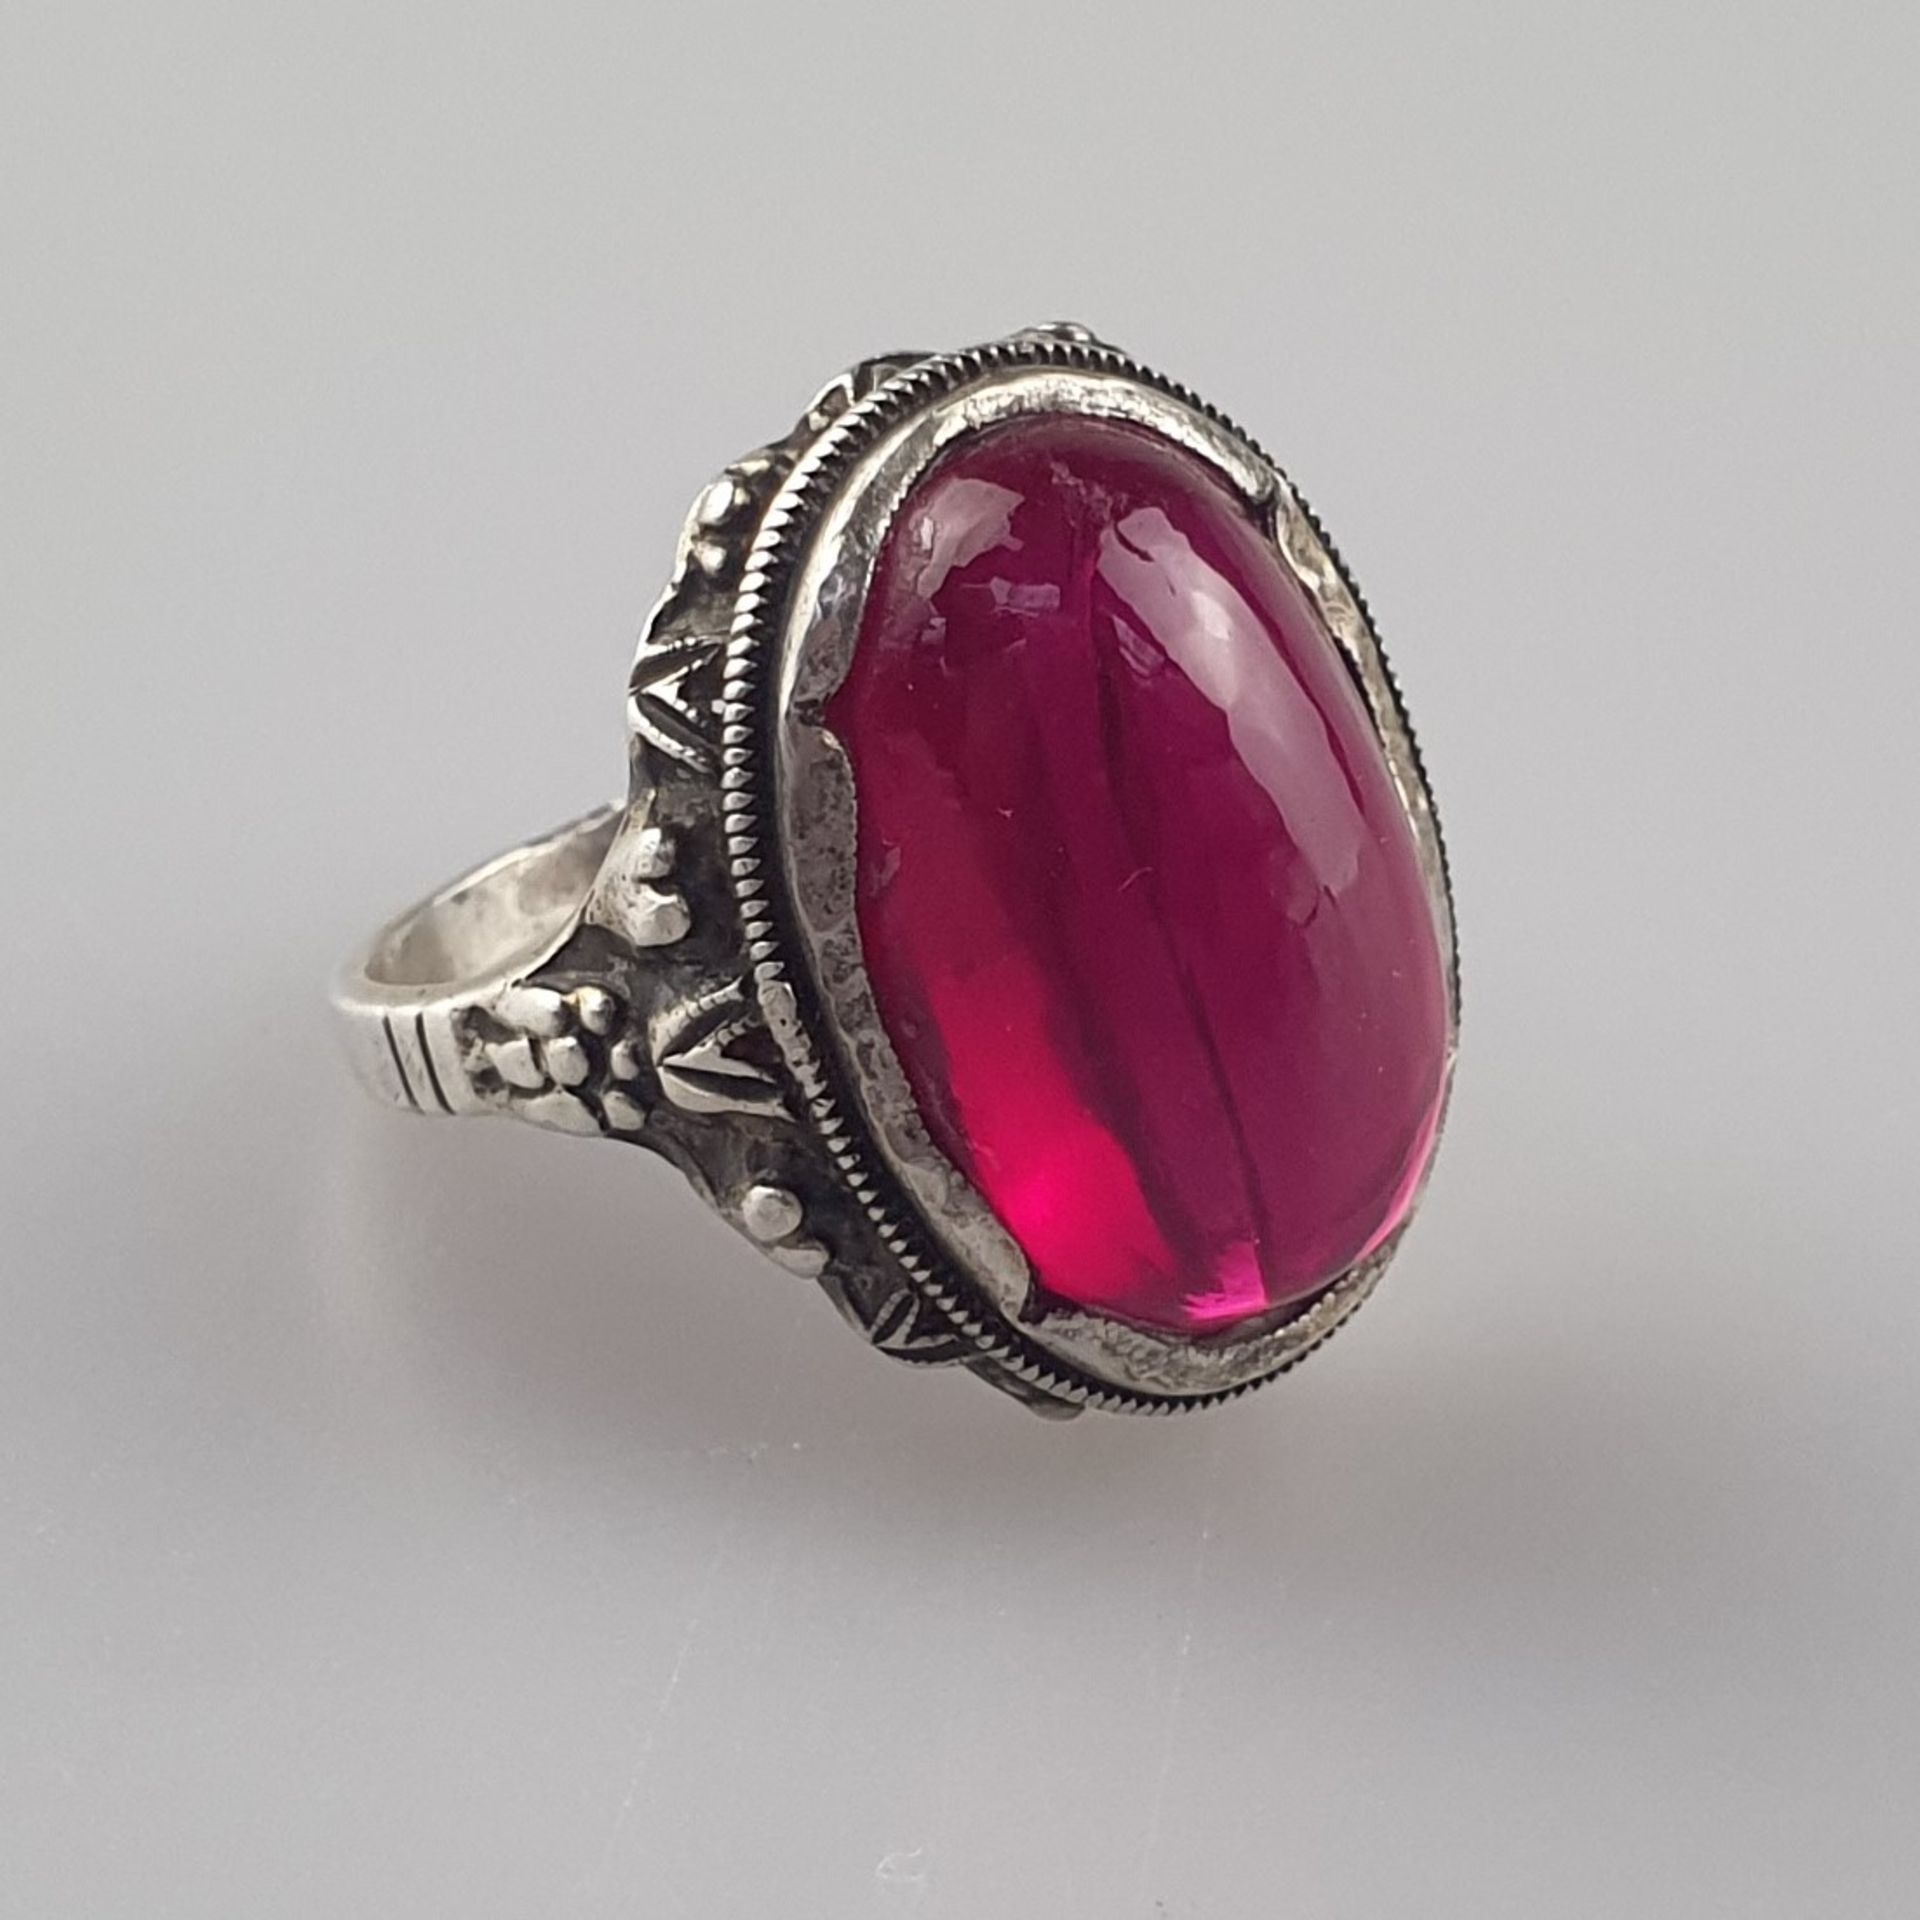 Silberring mit Rubin - mit ovalem poliertem Rubincabochon besetzt, Ringkopf ca.18 x 12 mm, Dm. Ring